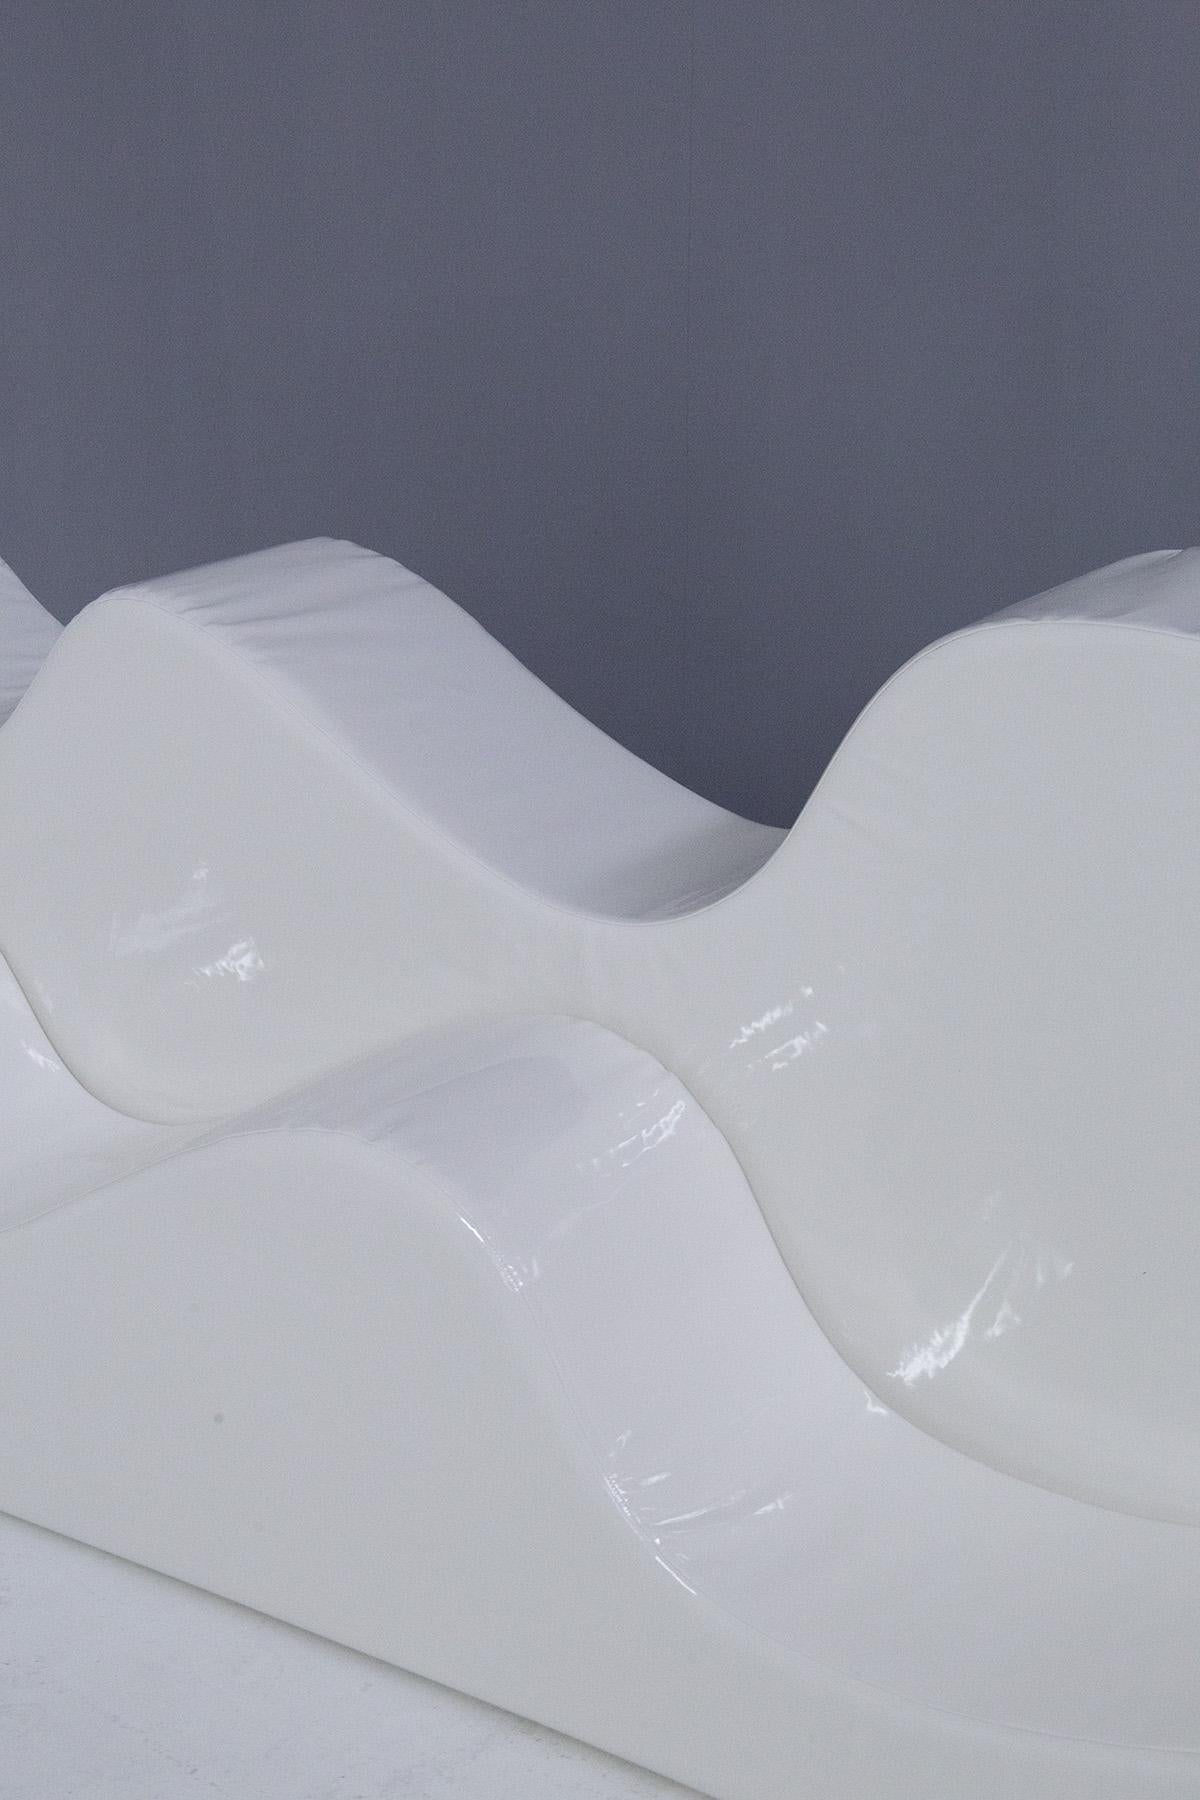 Italian Sofa Superonda White by Archizoom for Poltronova